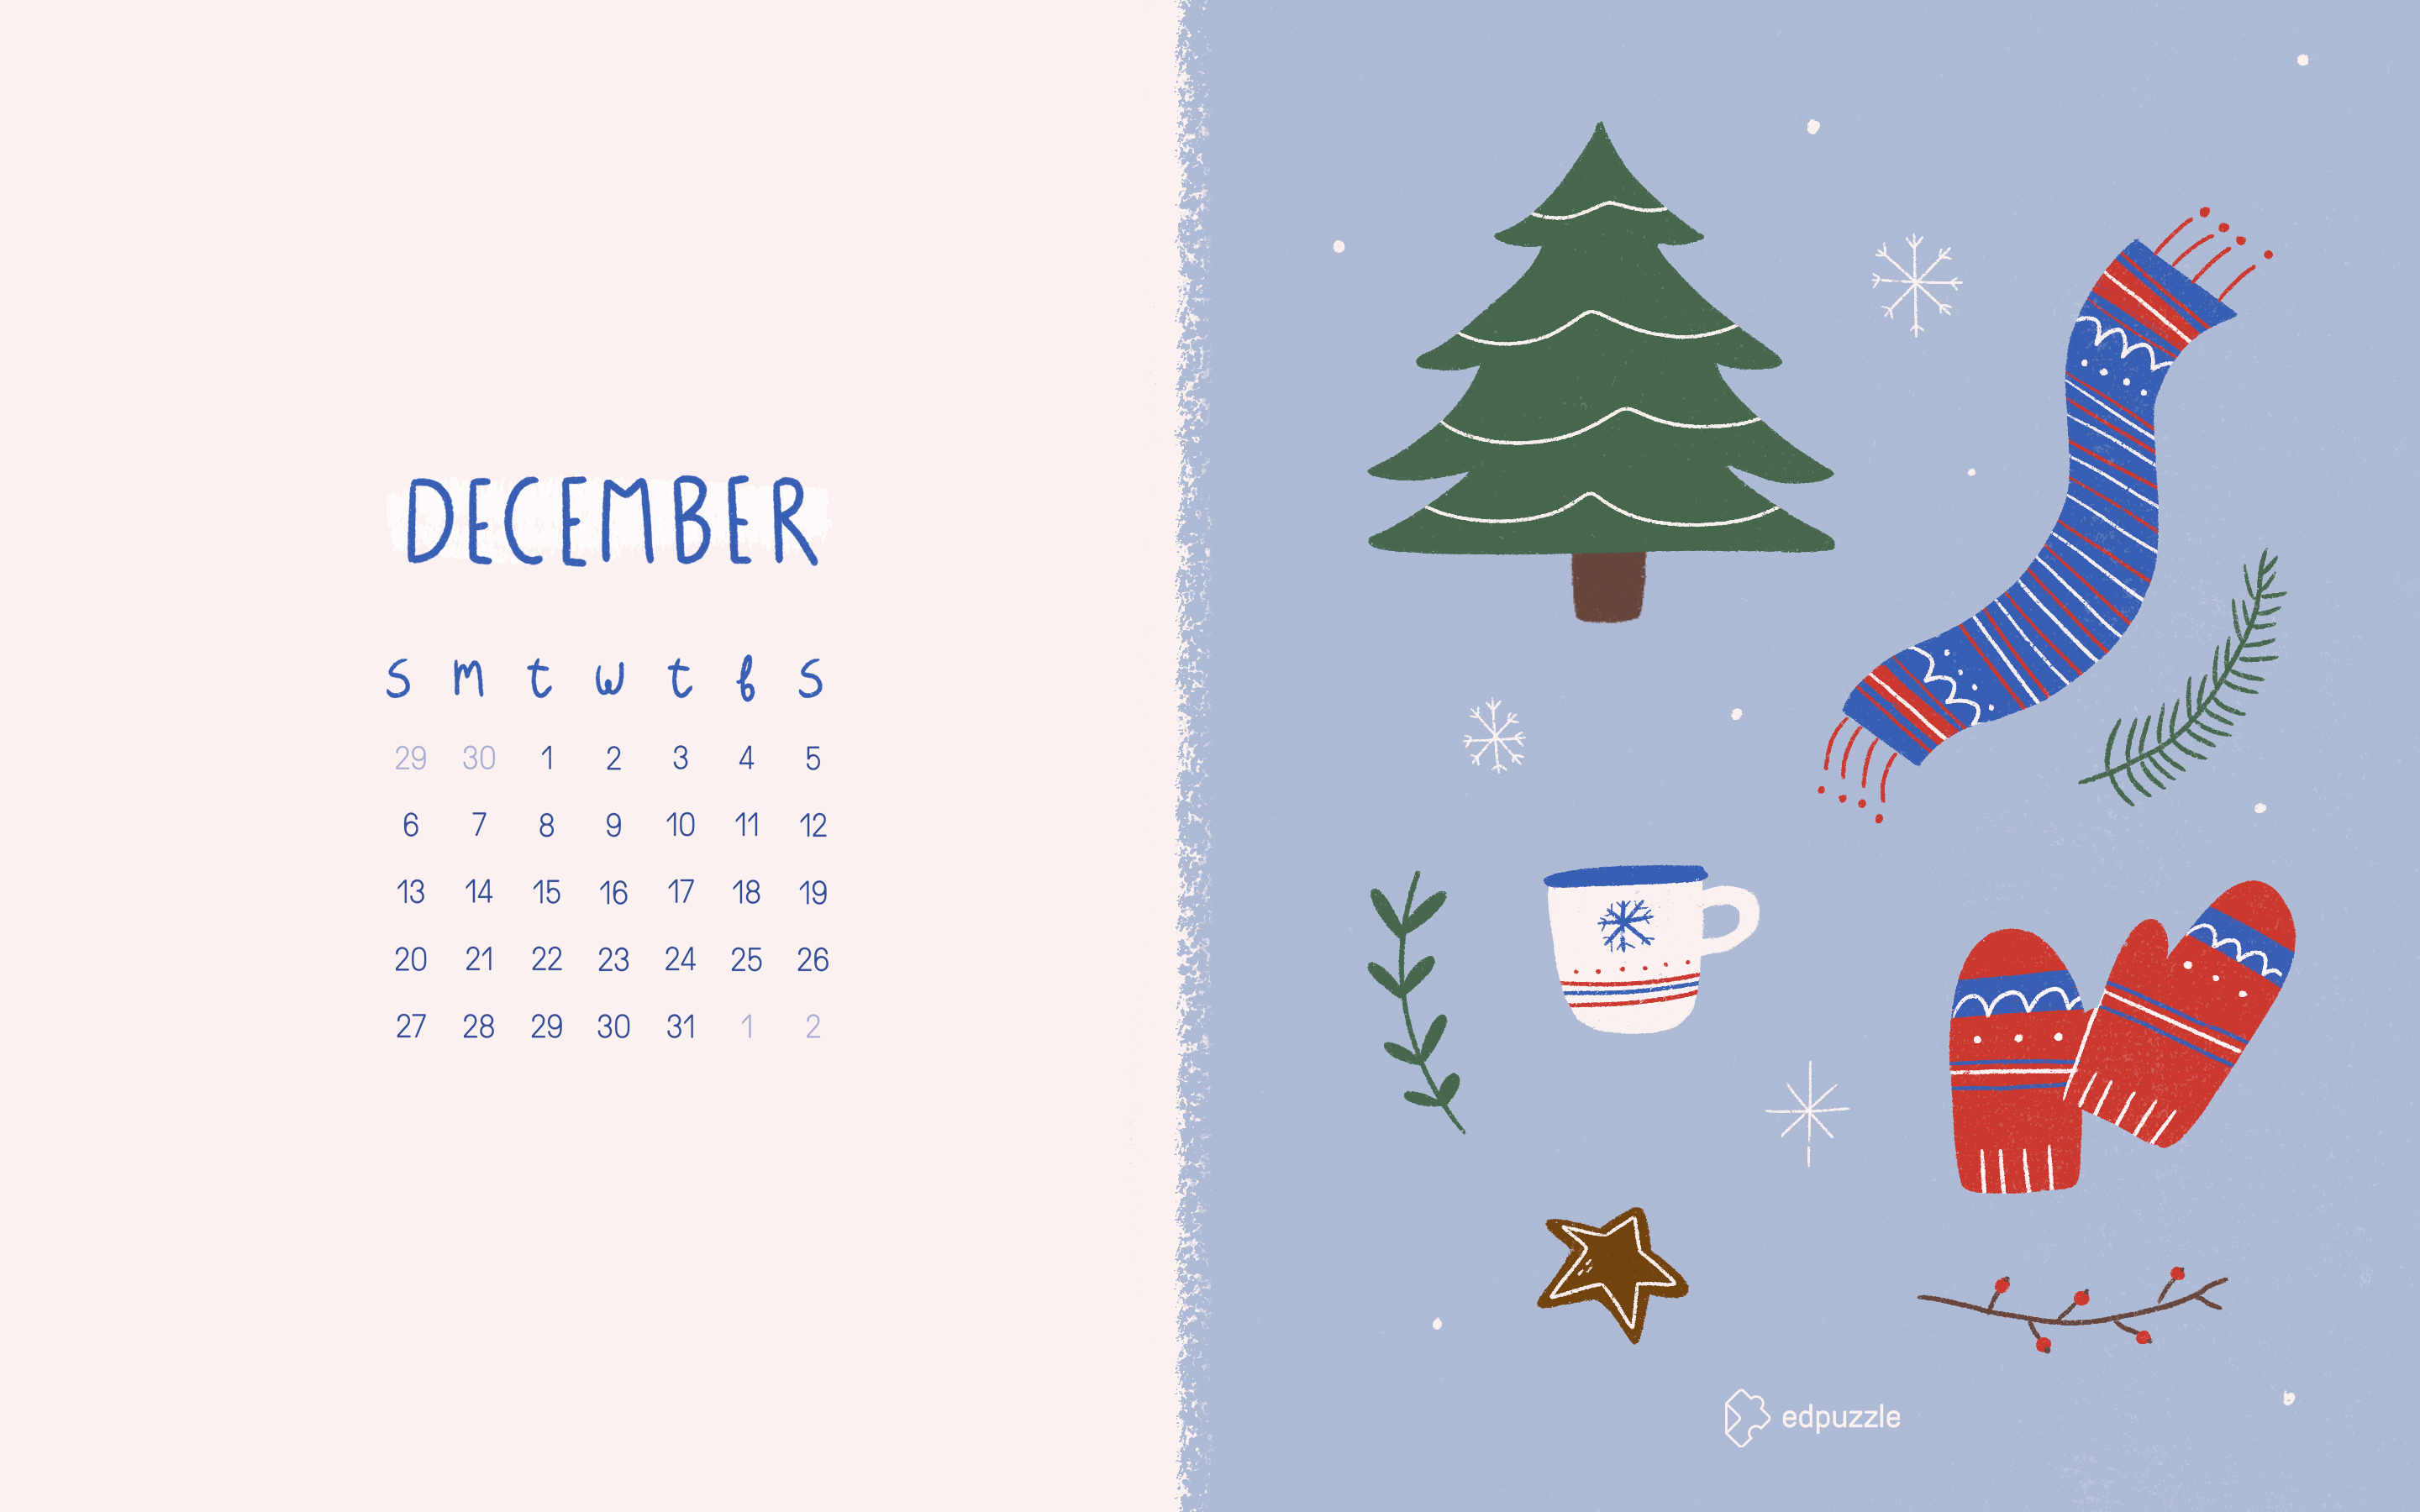 December Calendar Wallpaper Edpuzzle